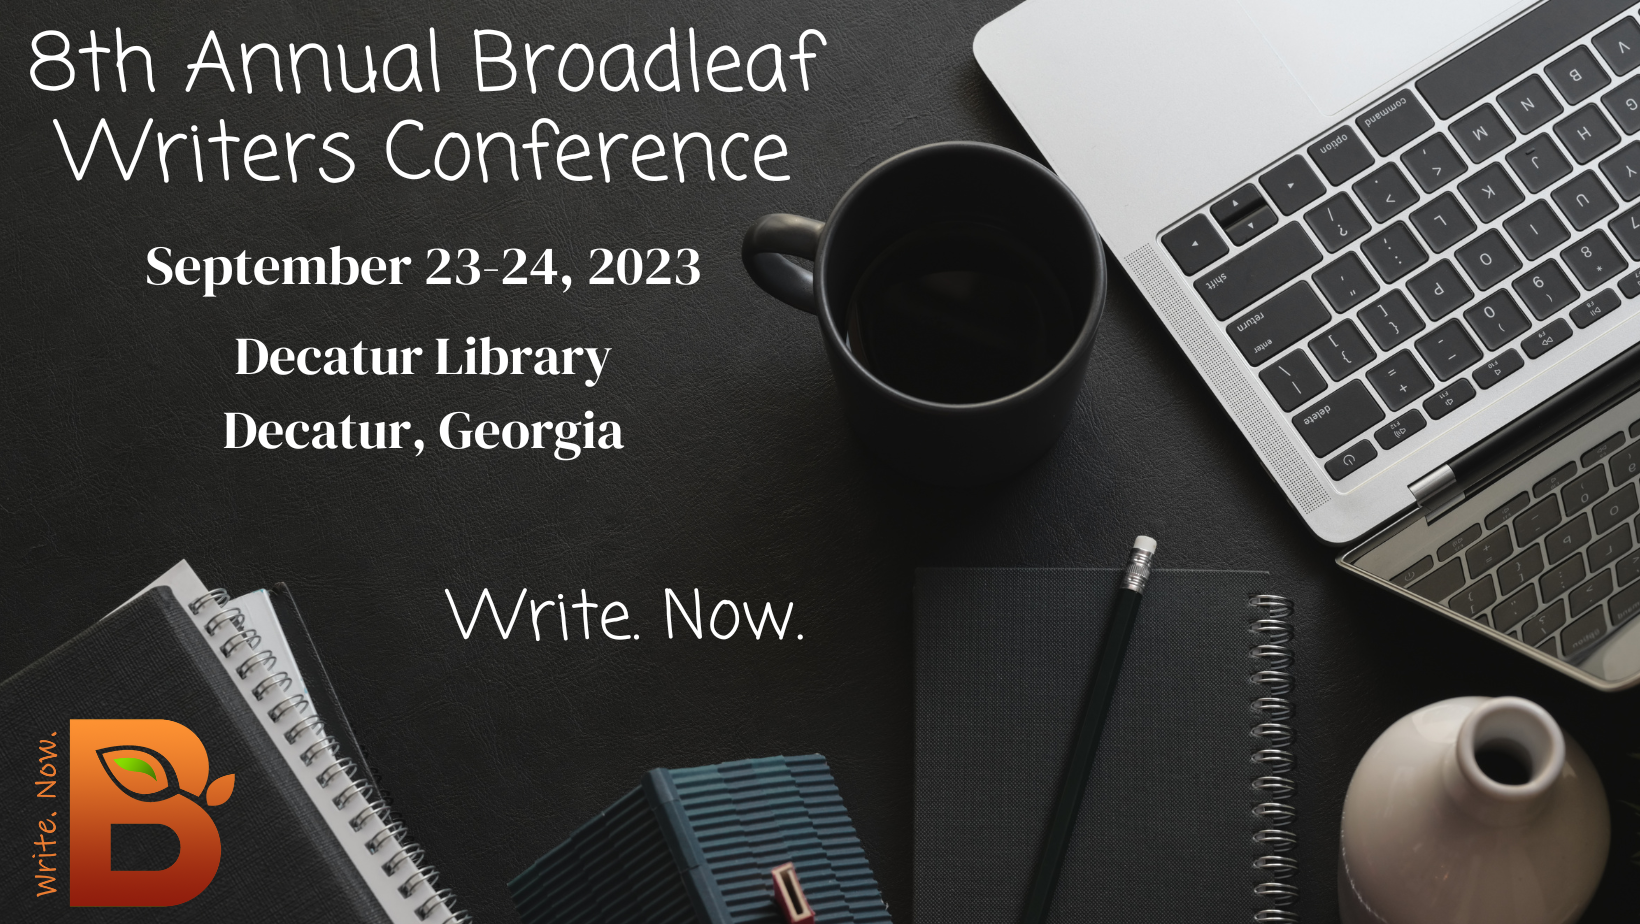 8th Annual Broadleaf Writers Conference Broadleaf Writers Association